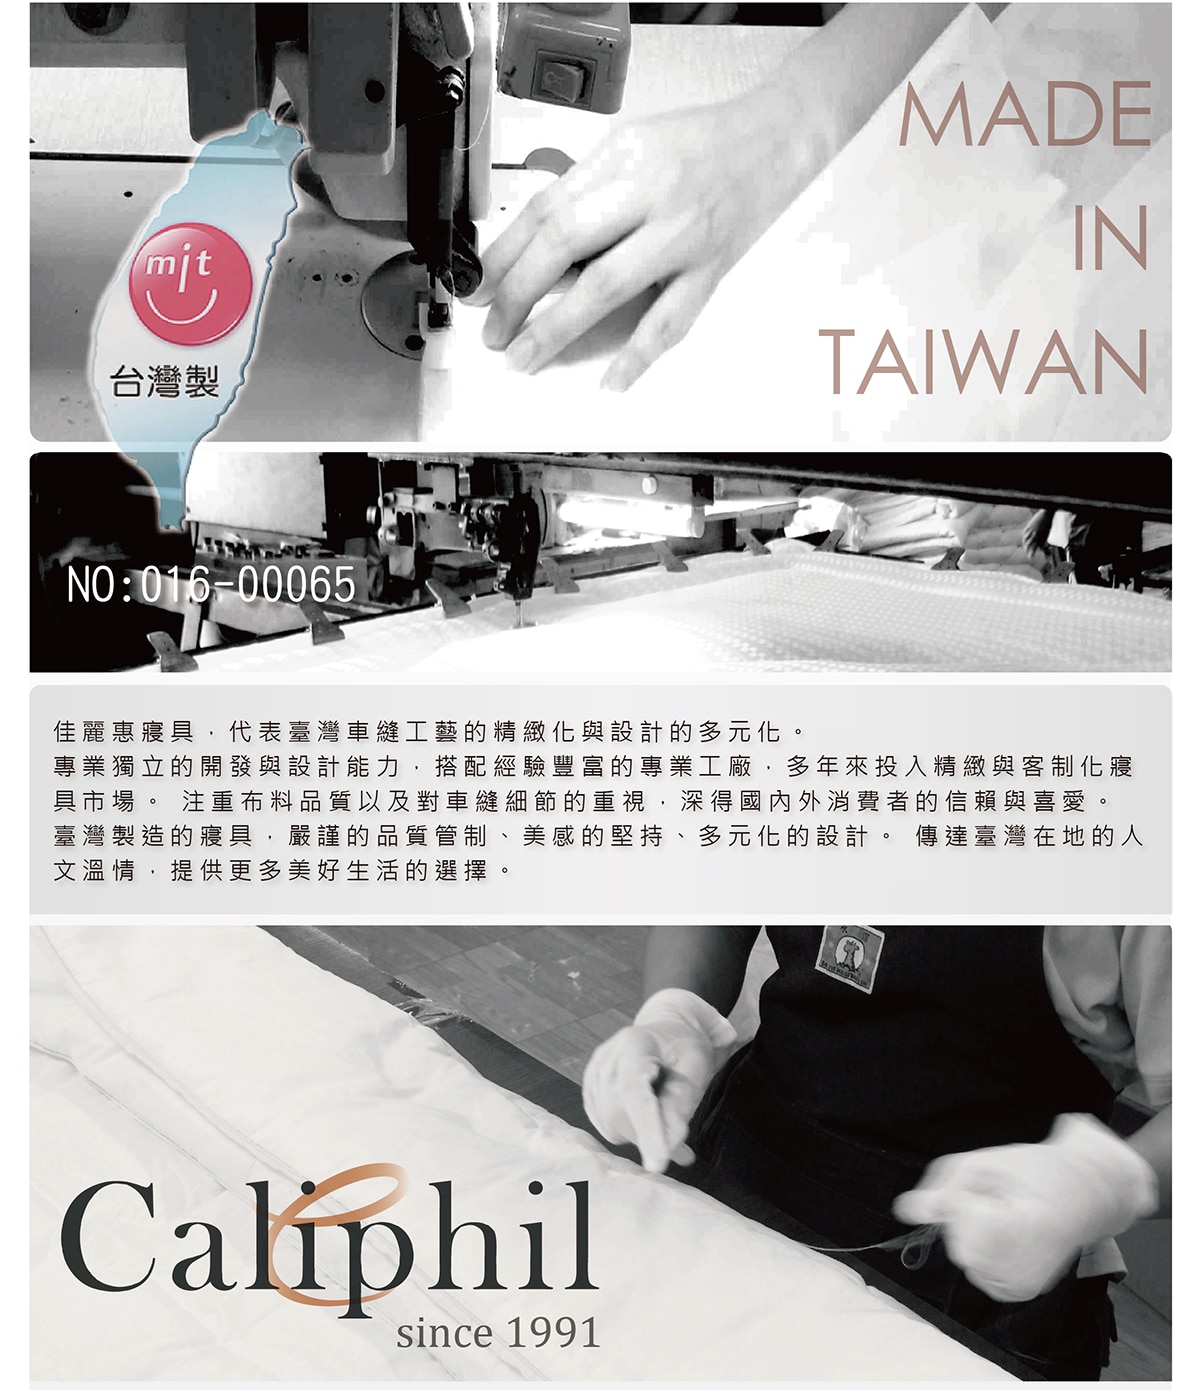 CALIPHIL 長纖萊賽爾冬被，台灣製造，嚴謹的品質管制、美感的堅持、多元化的設計。